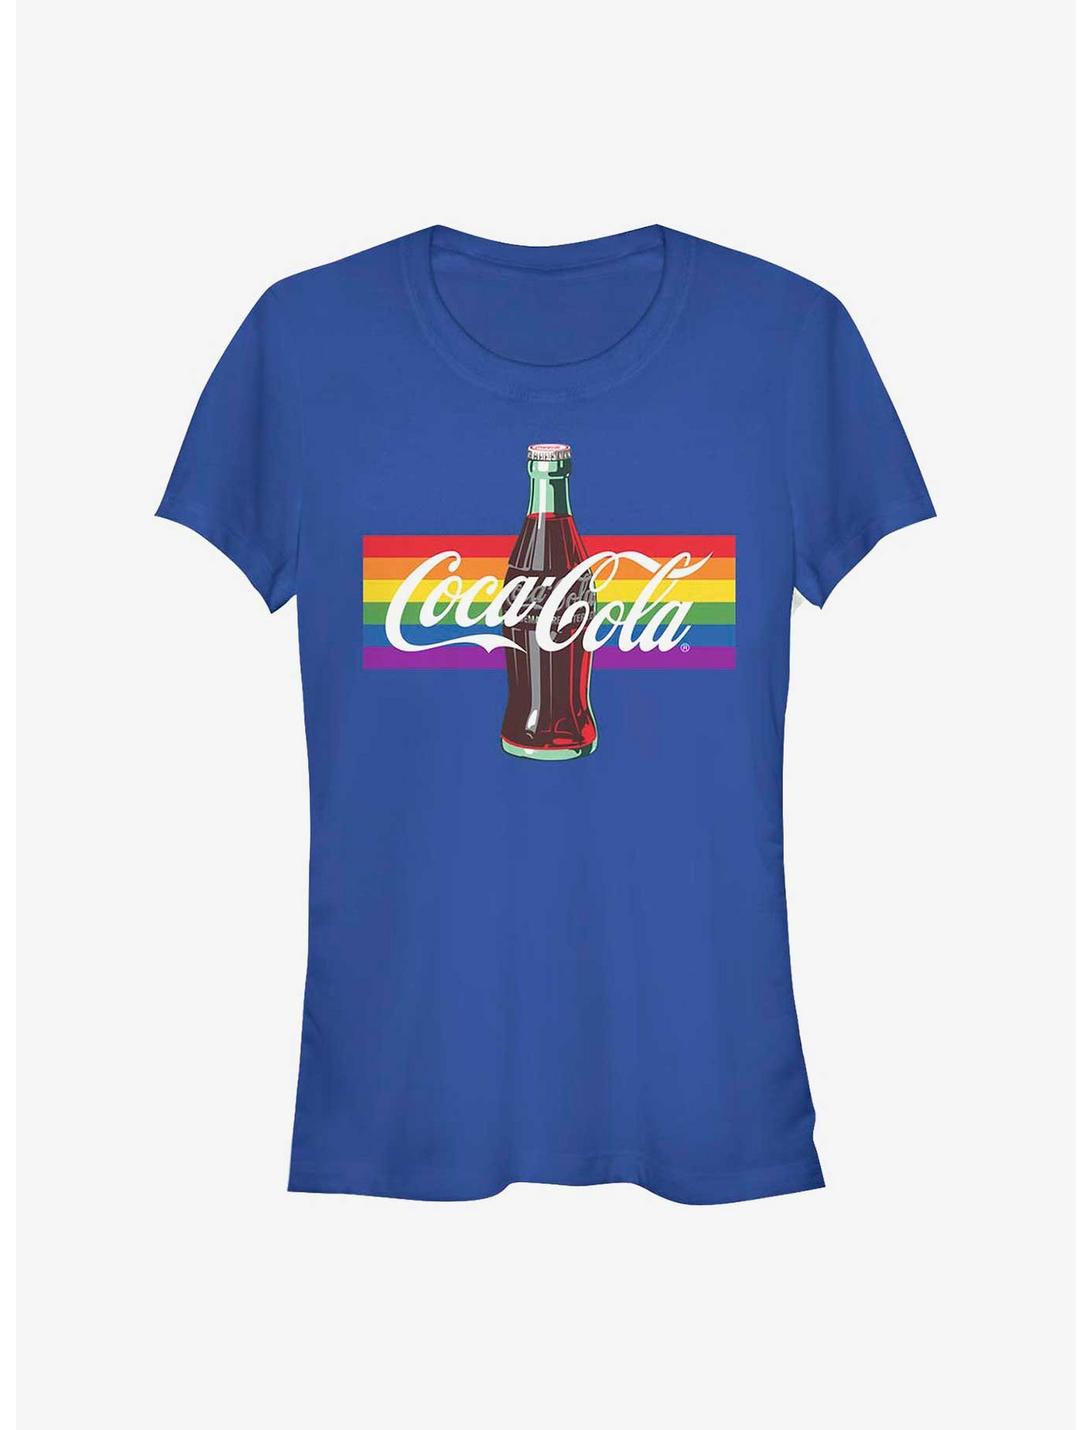 Coke Bottle Rainbow Logo Girls T-Shirt, ROYAL, hi-res